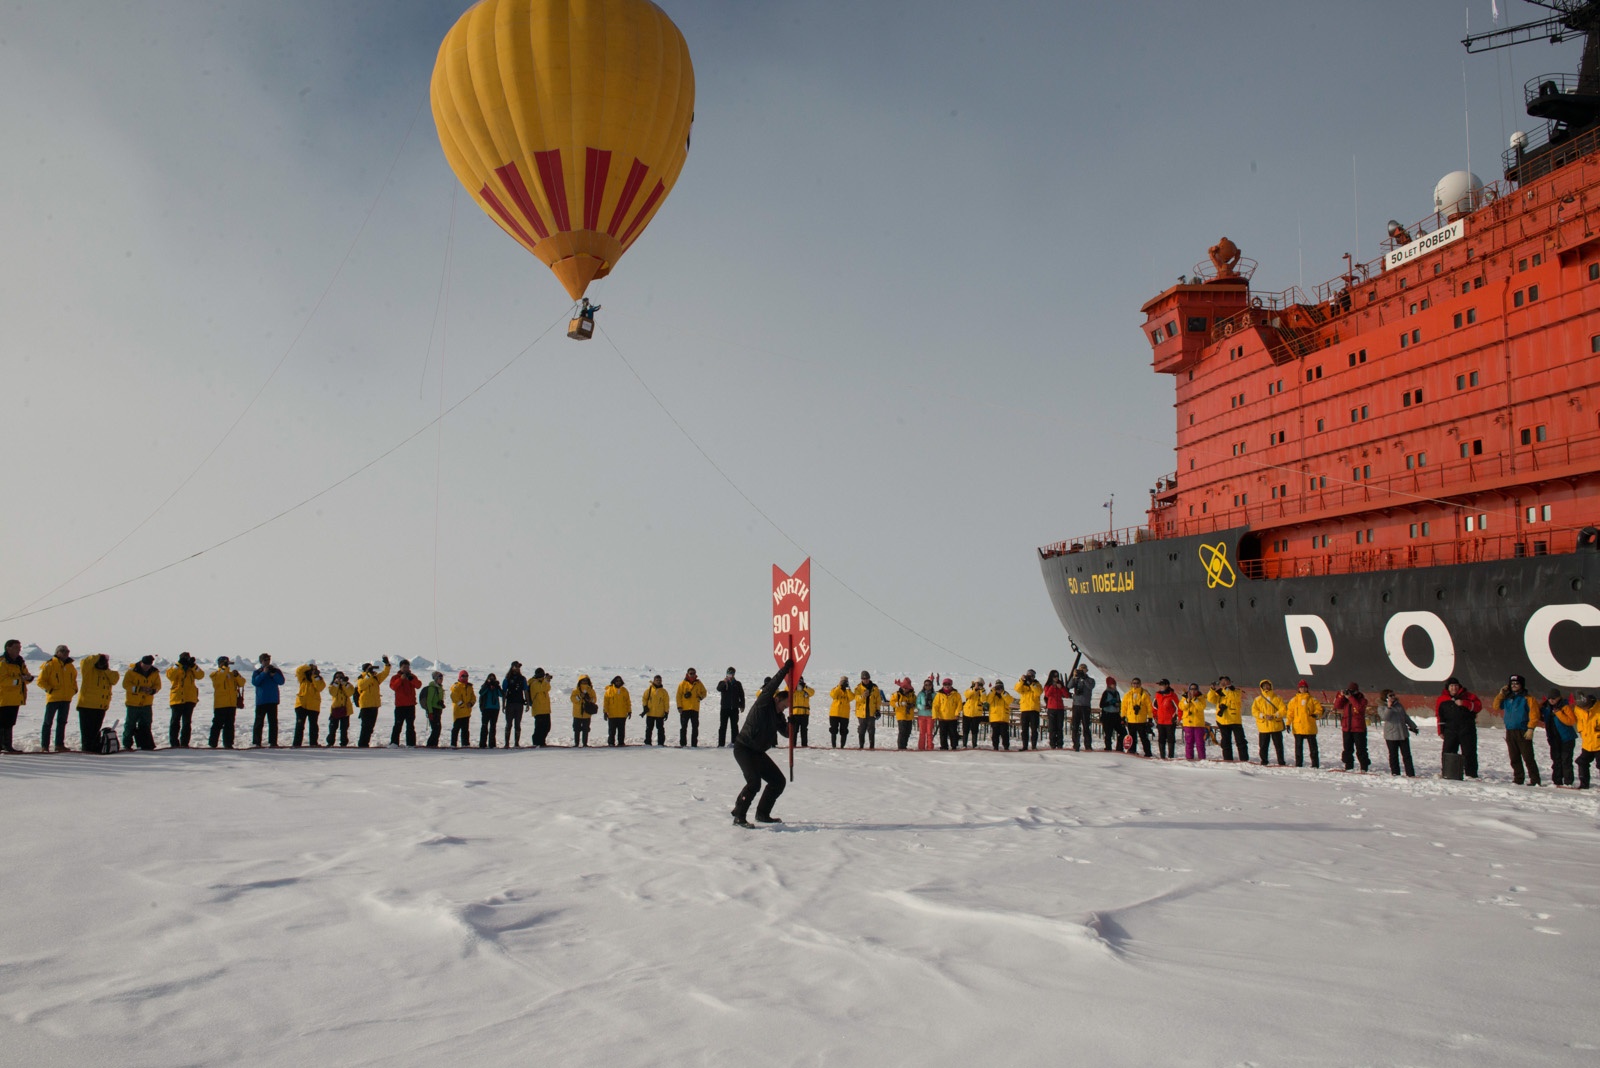 A hot air balloon flies high overhead as North Pole expedition passengers celebrate reaching their destination.